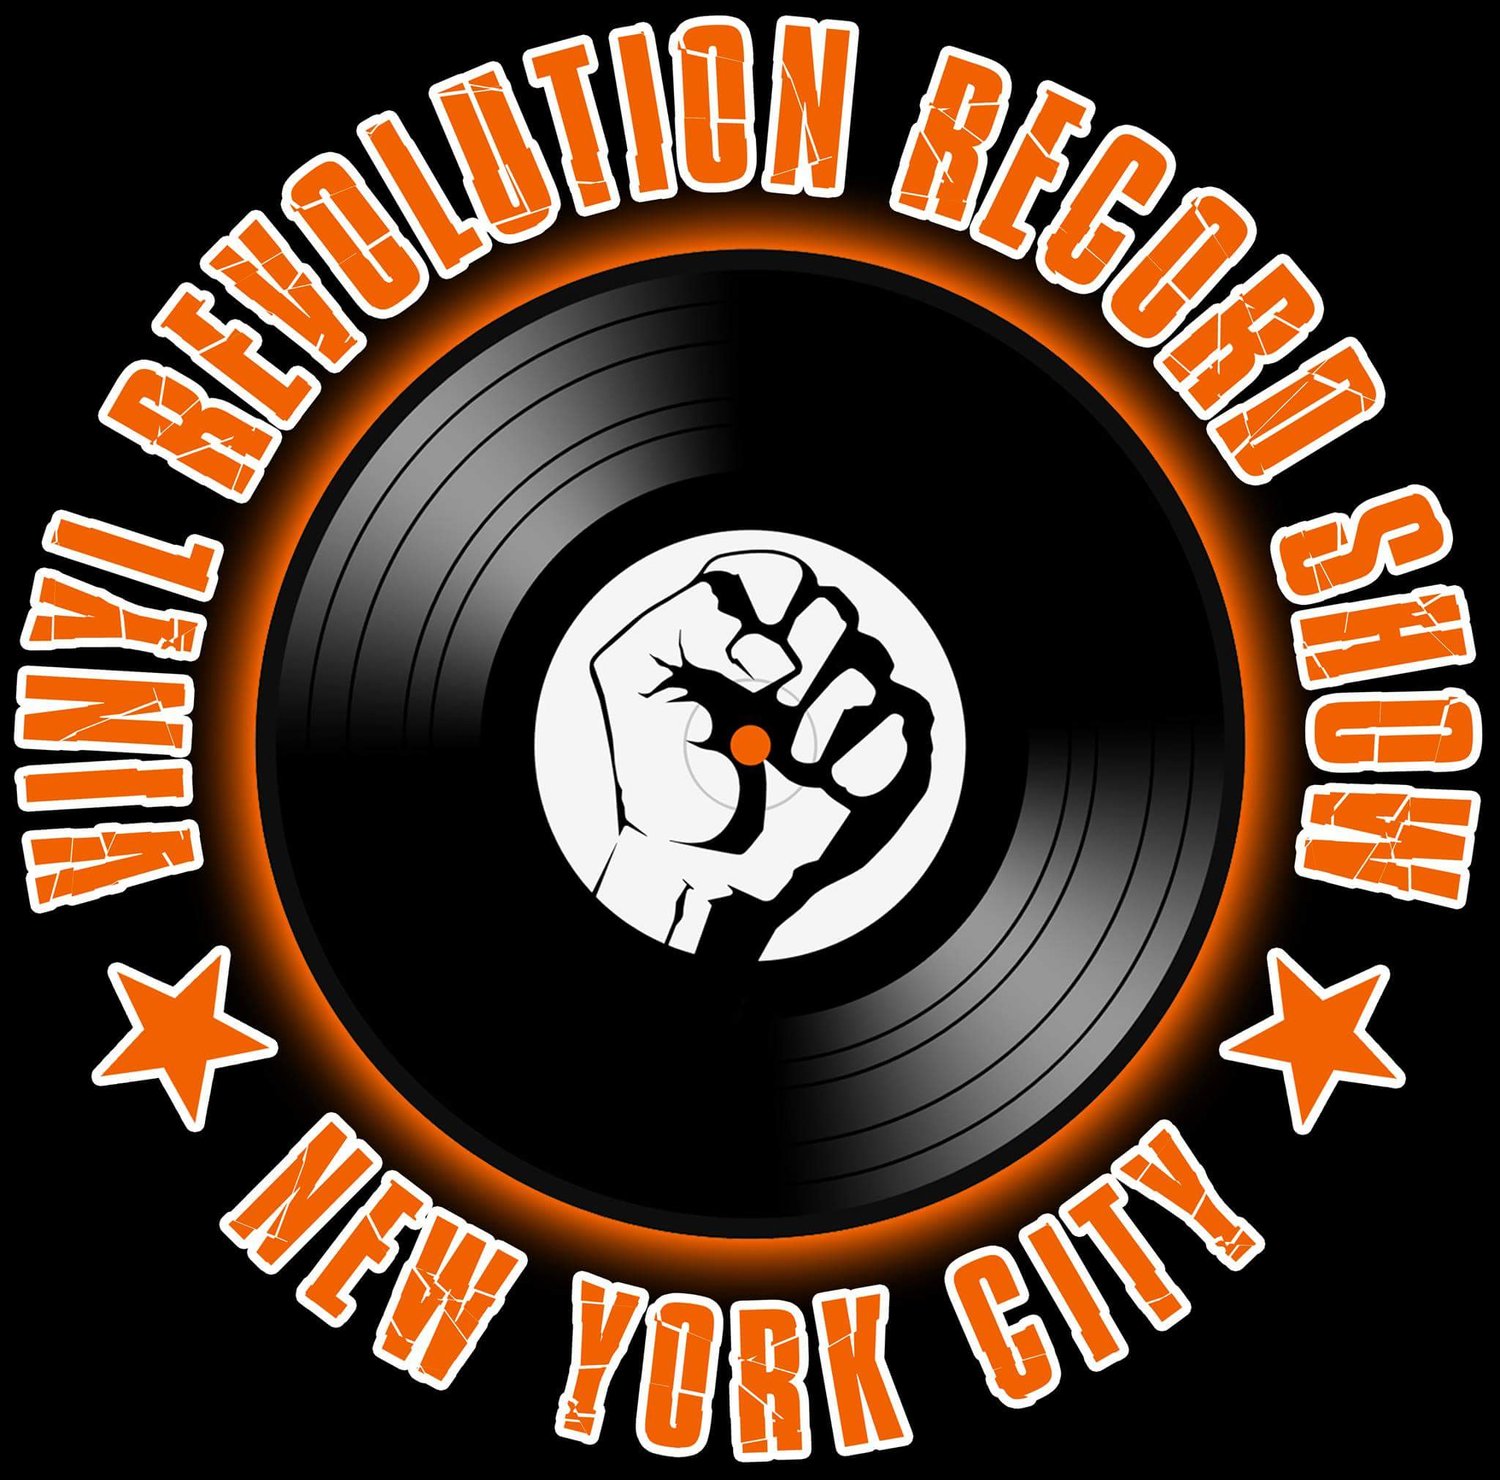 Vinyl Revolution Record Show